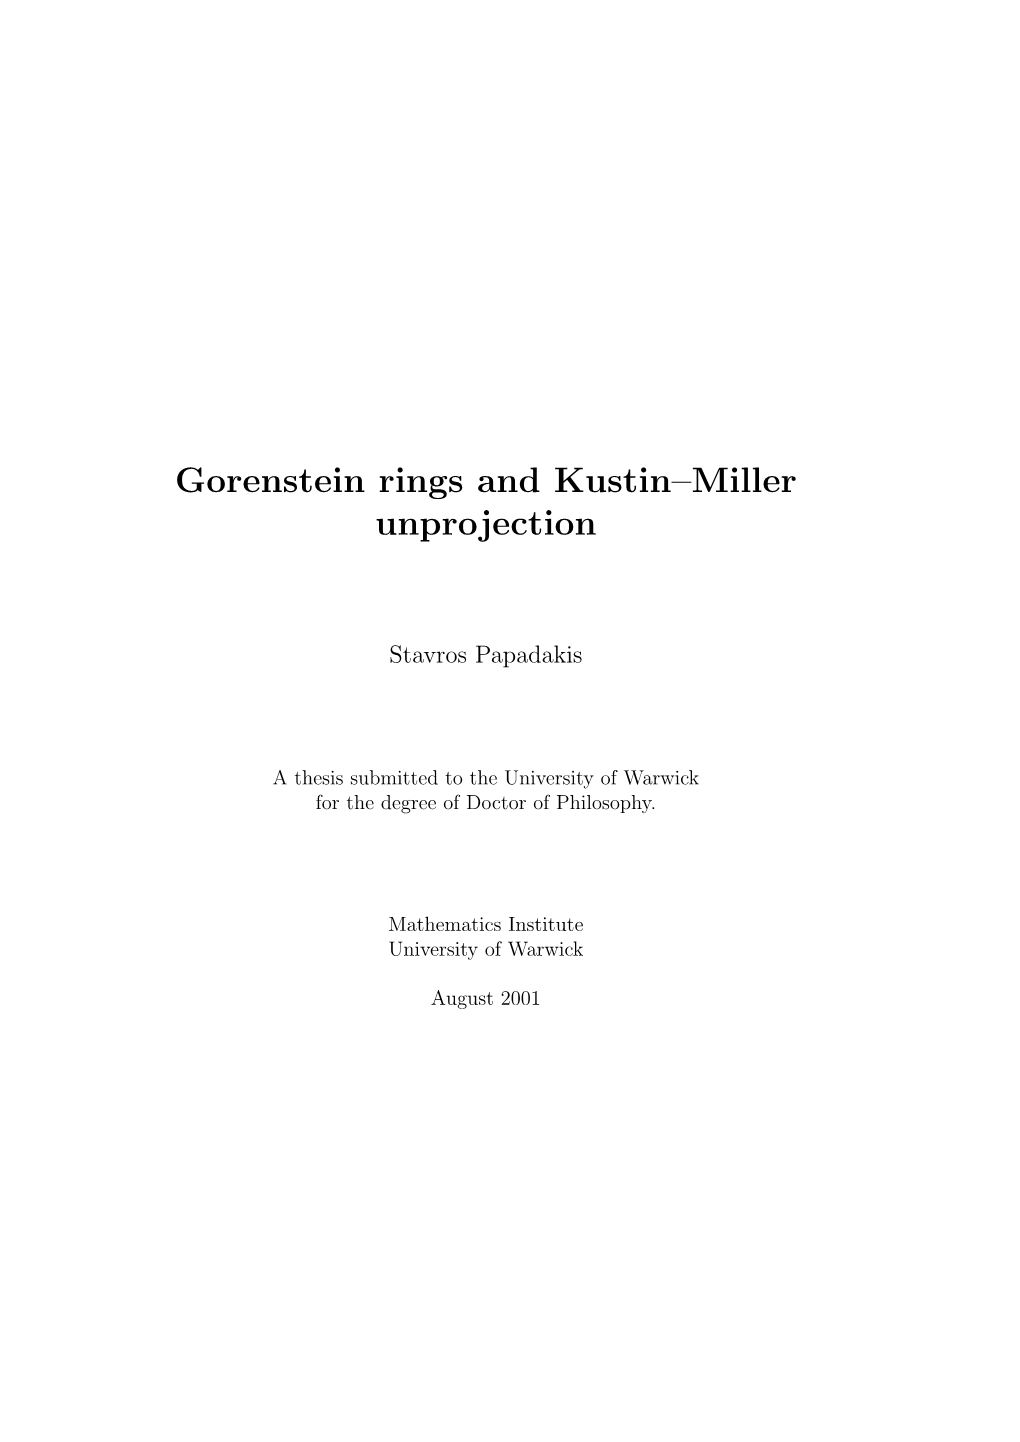 Gorenstein Rings and Kustin–Miller Unprojection